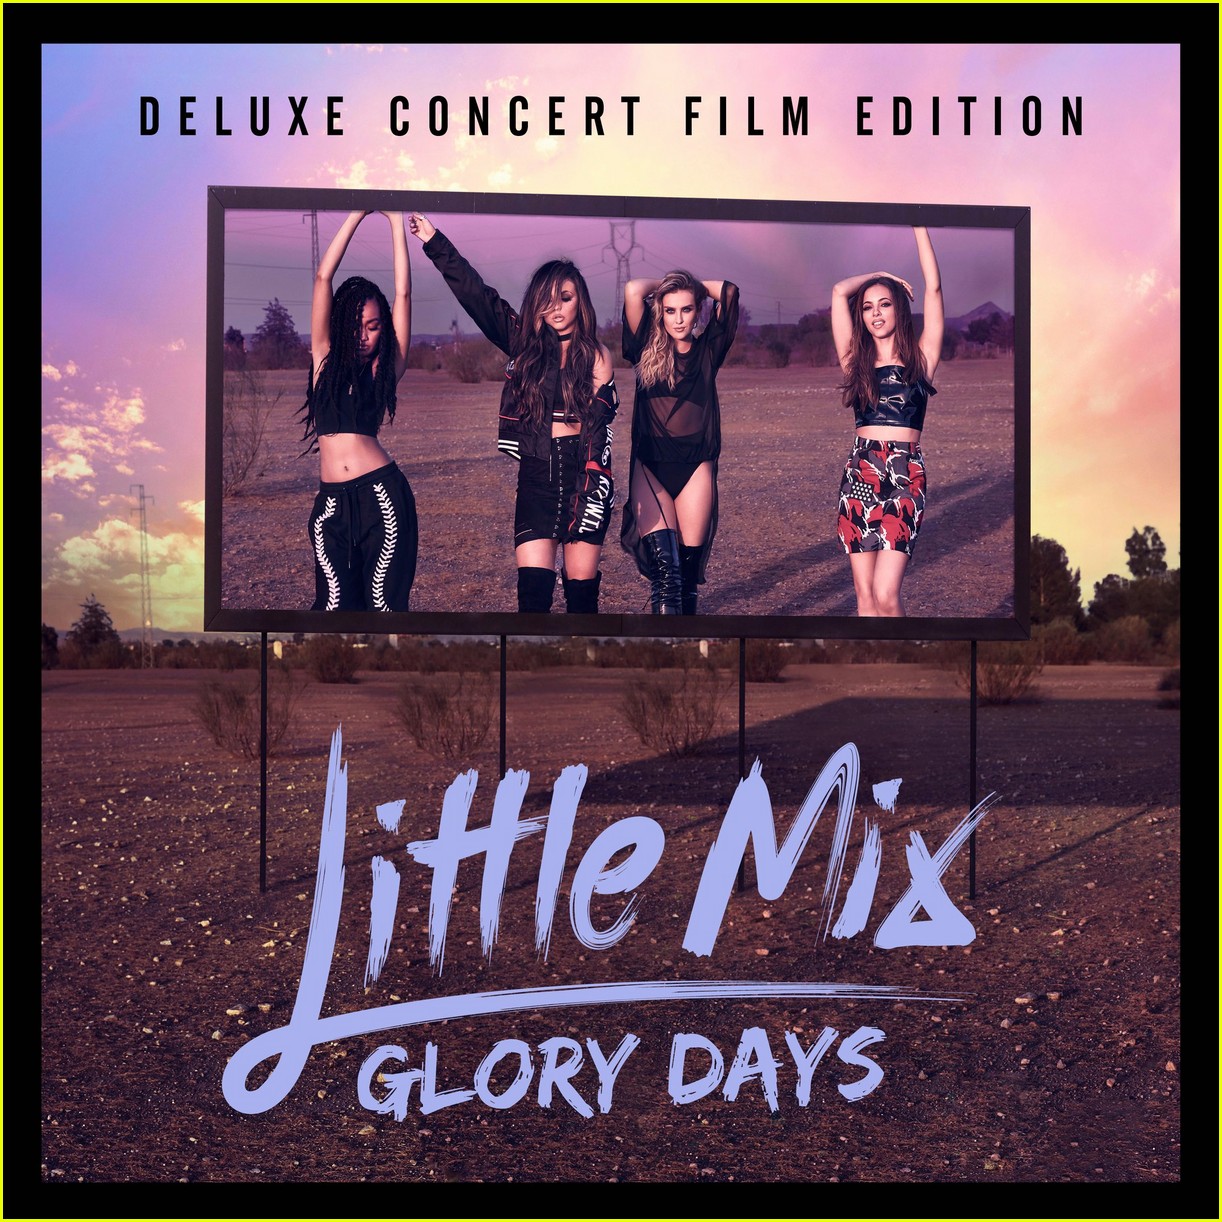 little mix announce fourth album glory days 02